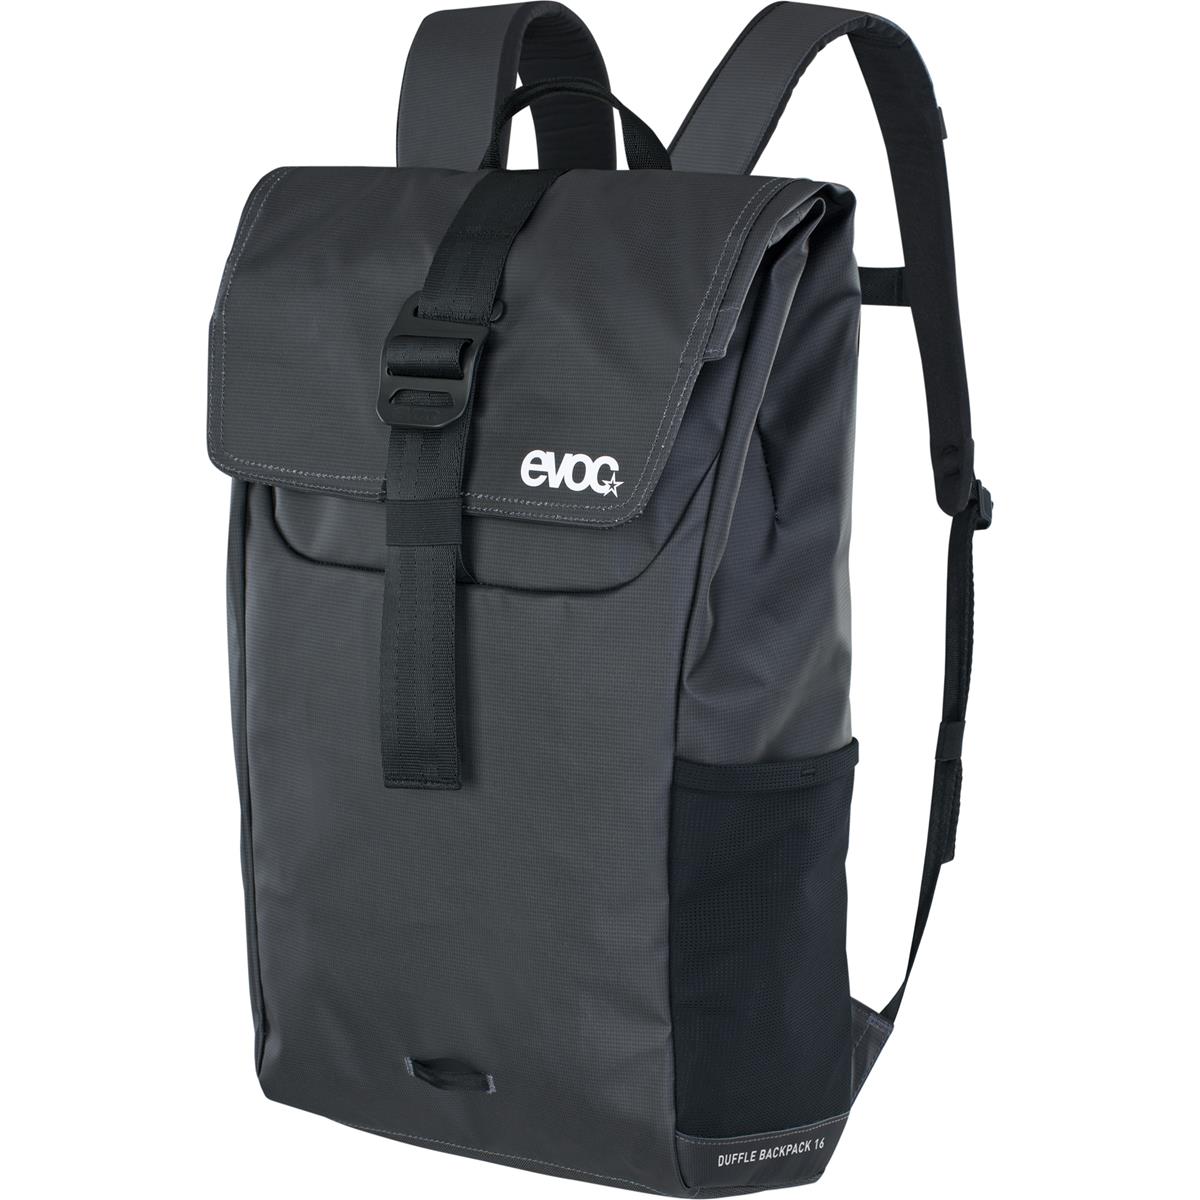 Evoc Backpack Duffle Backpack 16 Carbon Gray/Black